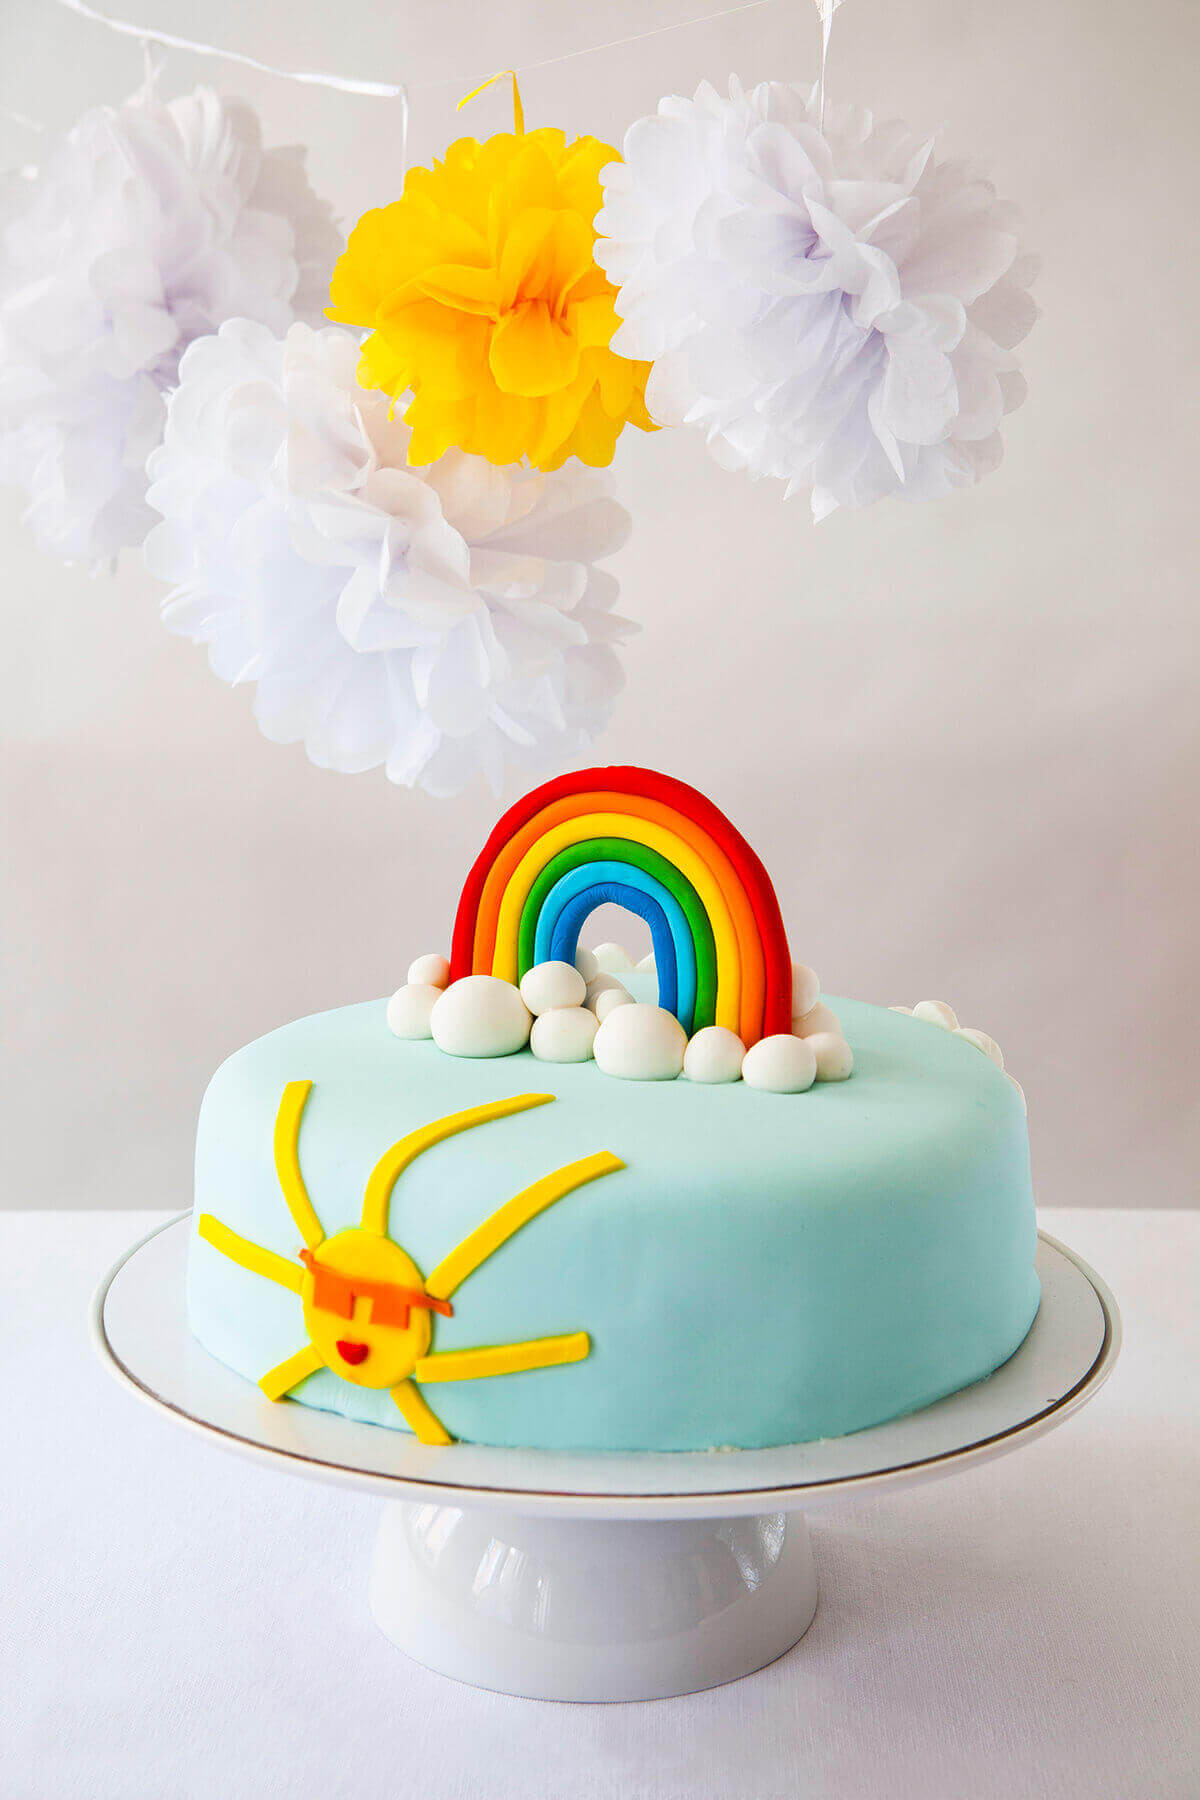 DIY Kids Birthday Cakes
 Rainbow Themed DIY Birthday Cake Decorating Kit for Kids